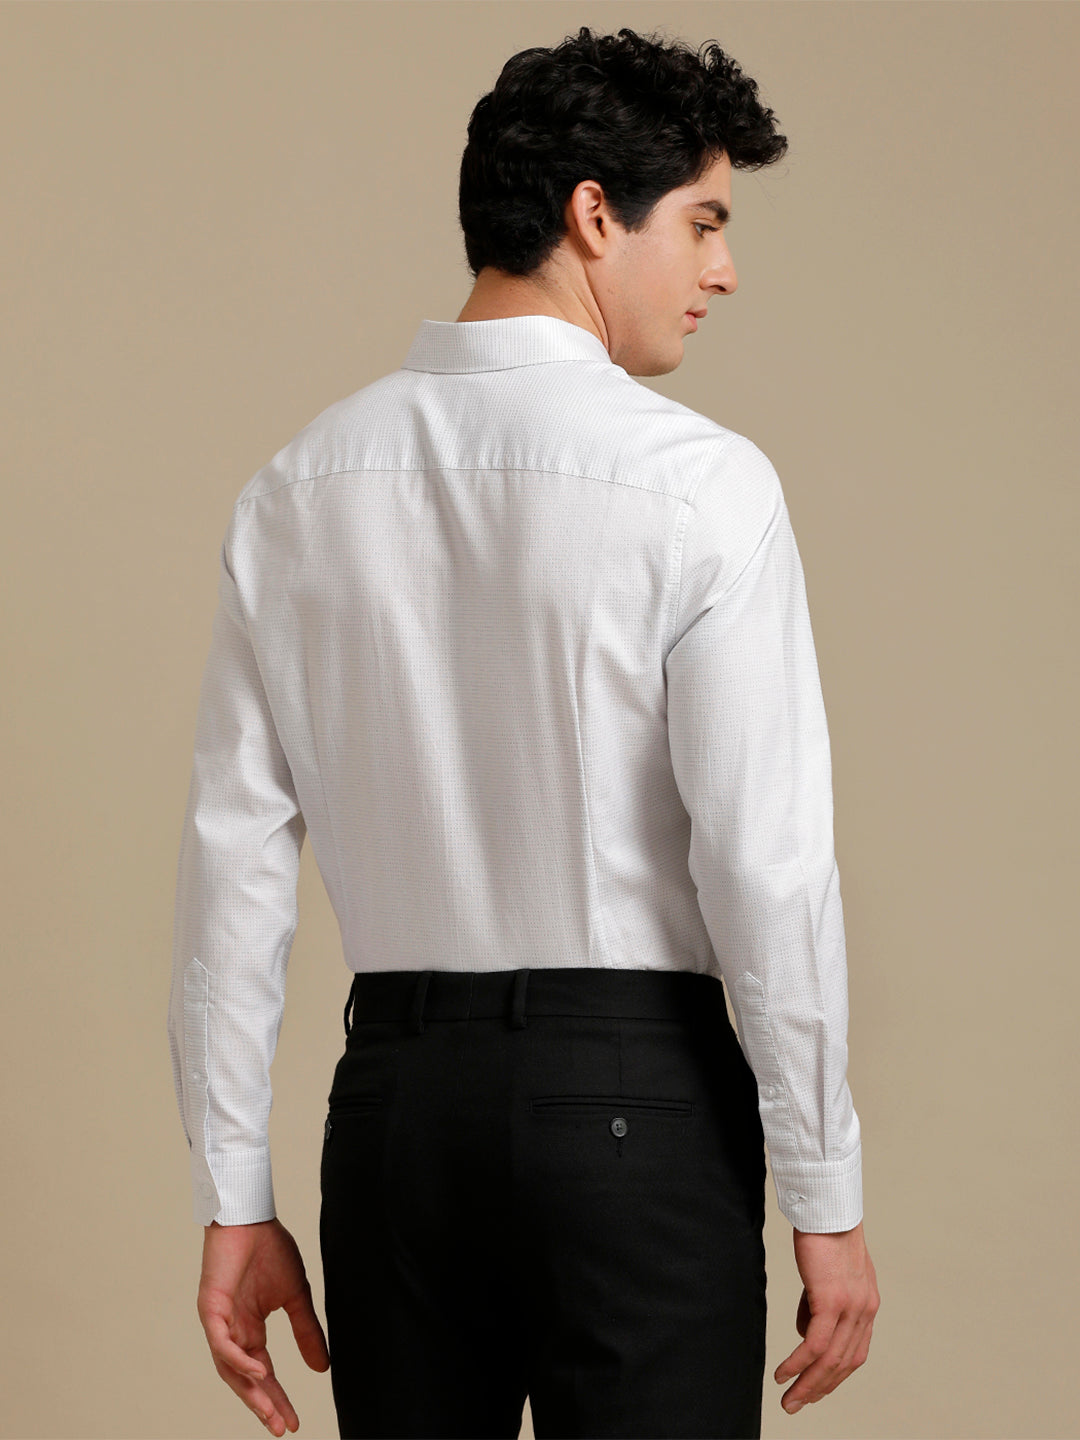 Aldeno Mens Slim Fit Dots White/Navy Formal Cotton Shirt (FORBUL)